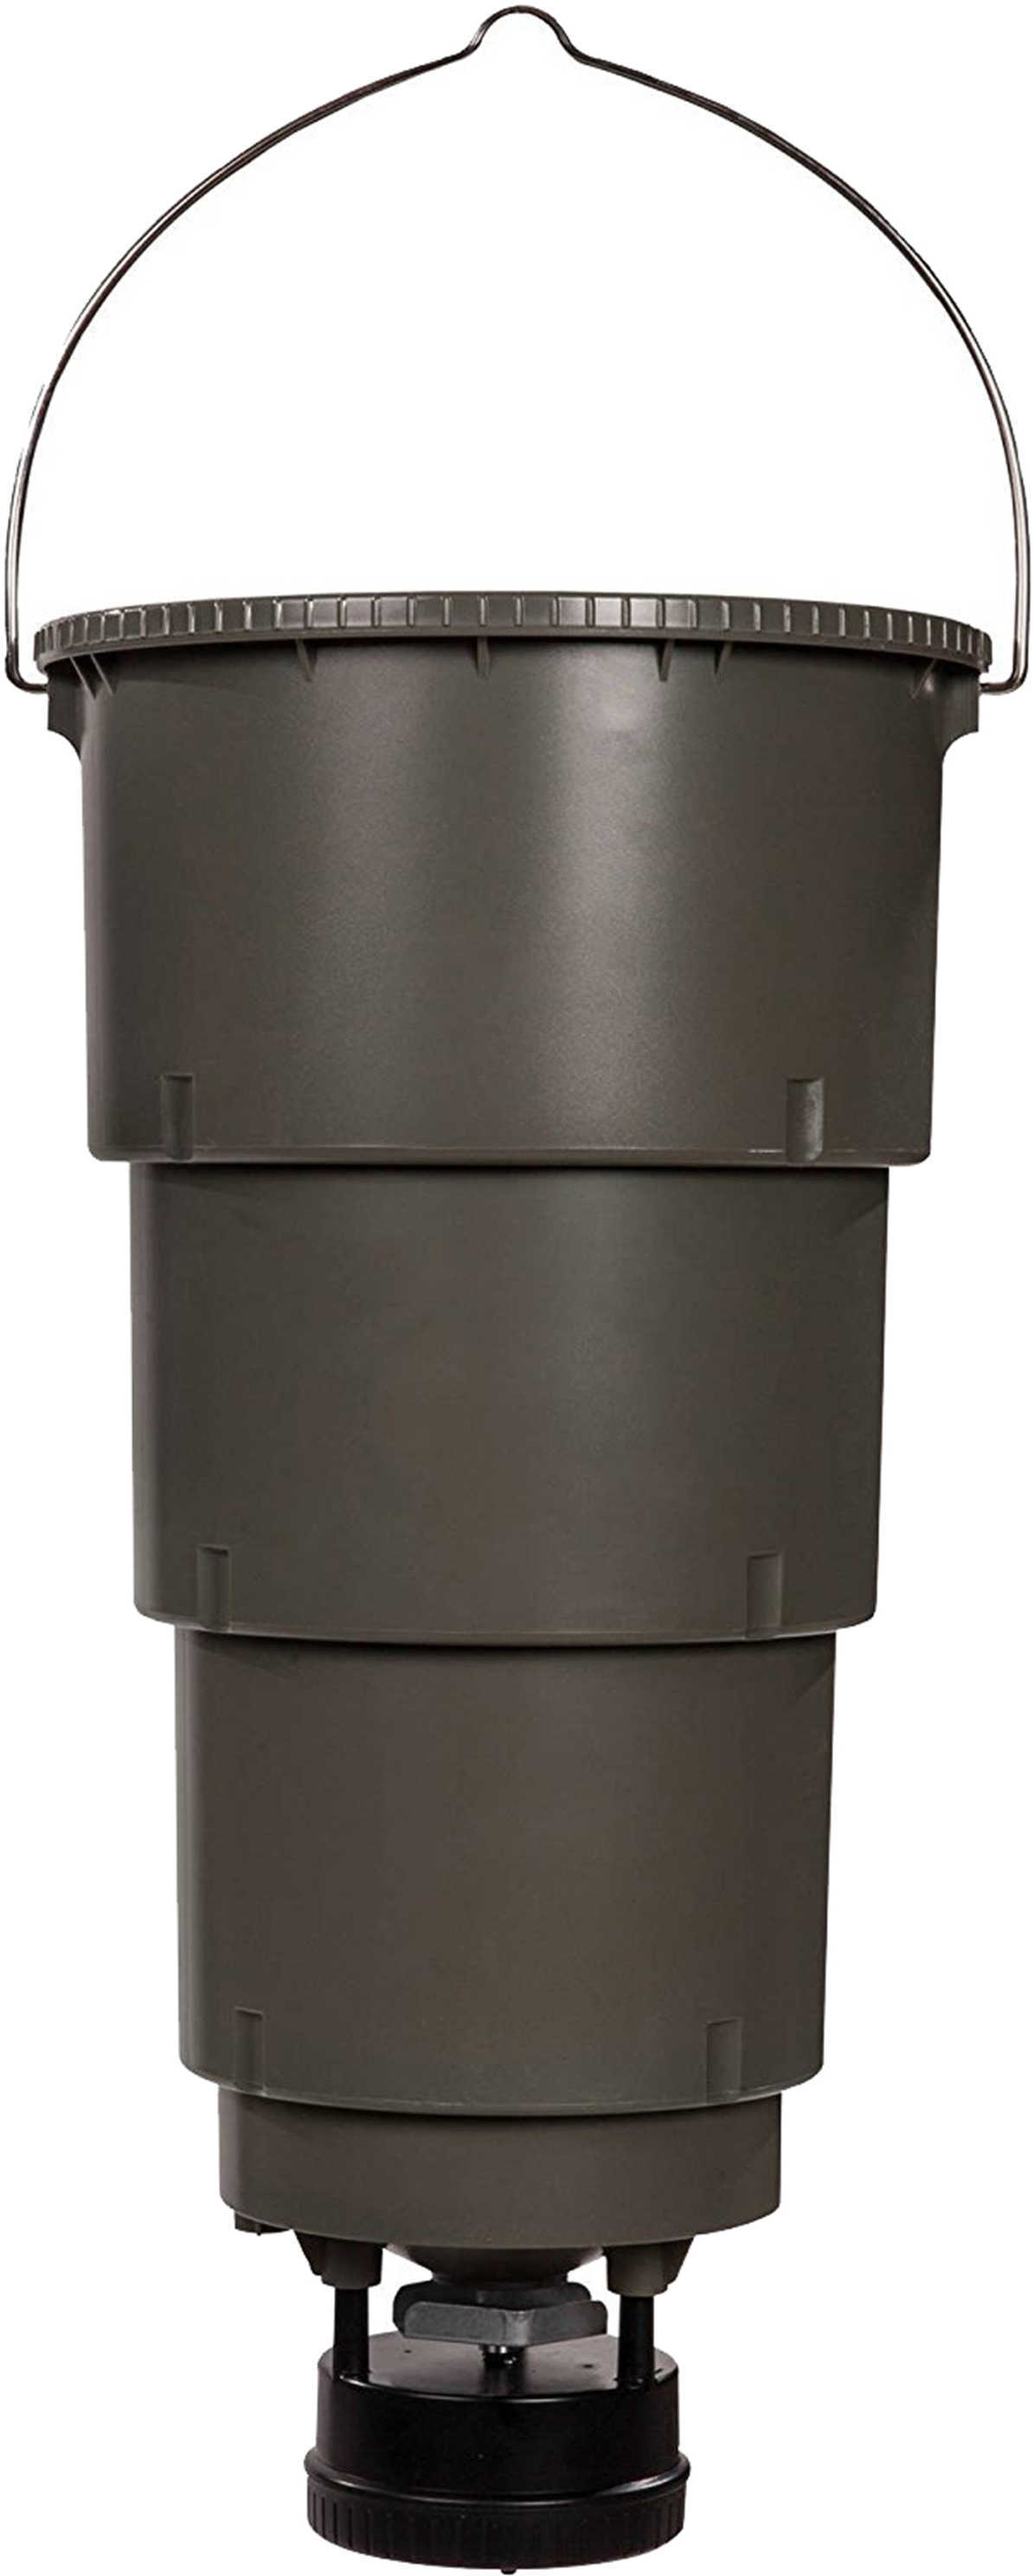 False Model: MFG-13074 Digital timer programming Brown 5 gallon collapsible bucket